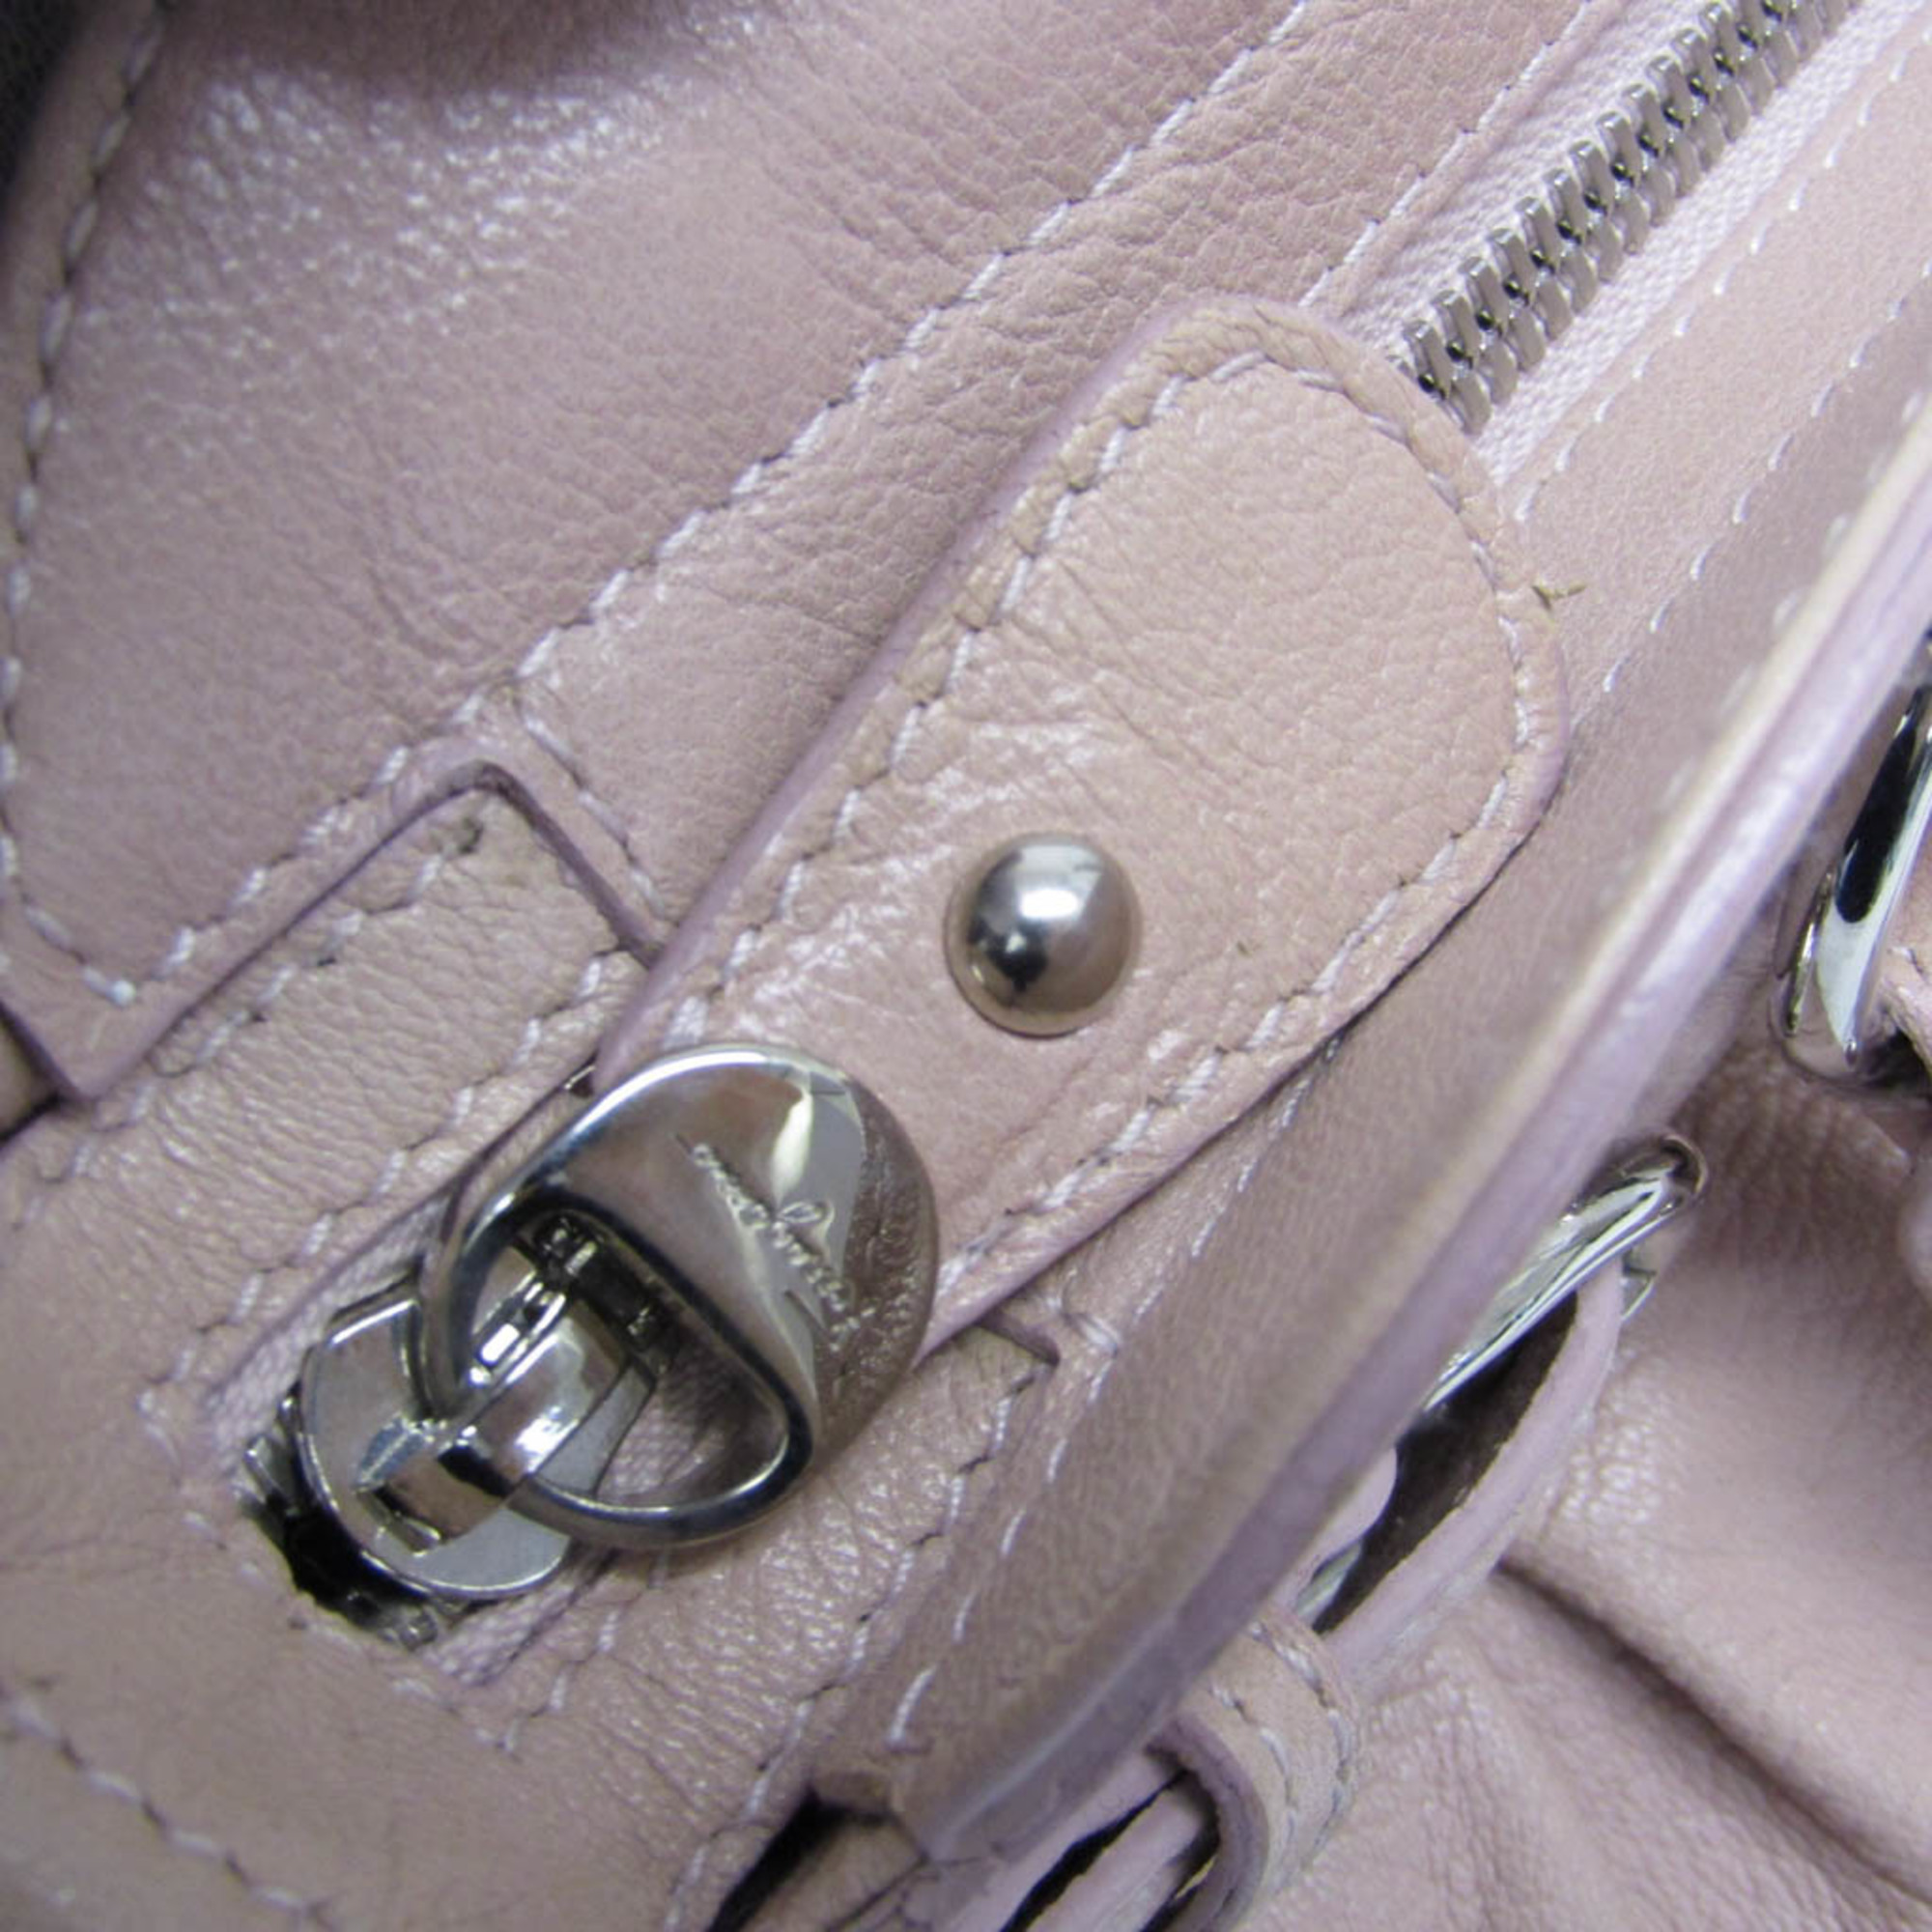 Salvatore Ferragamo Gancini AB-21 5370 Women's Leather Handbag Light Pink